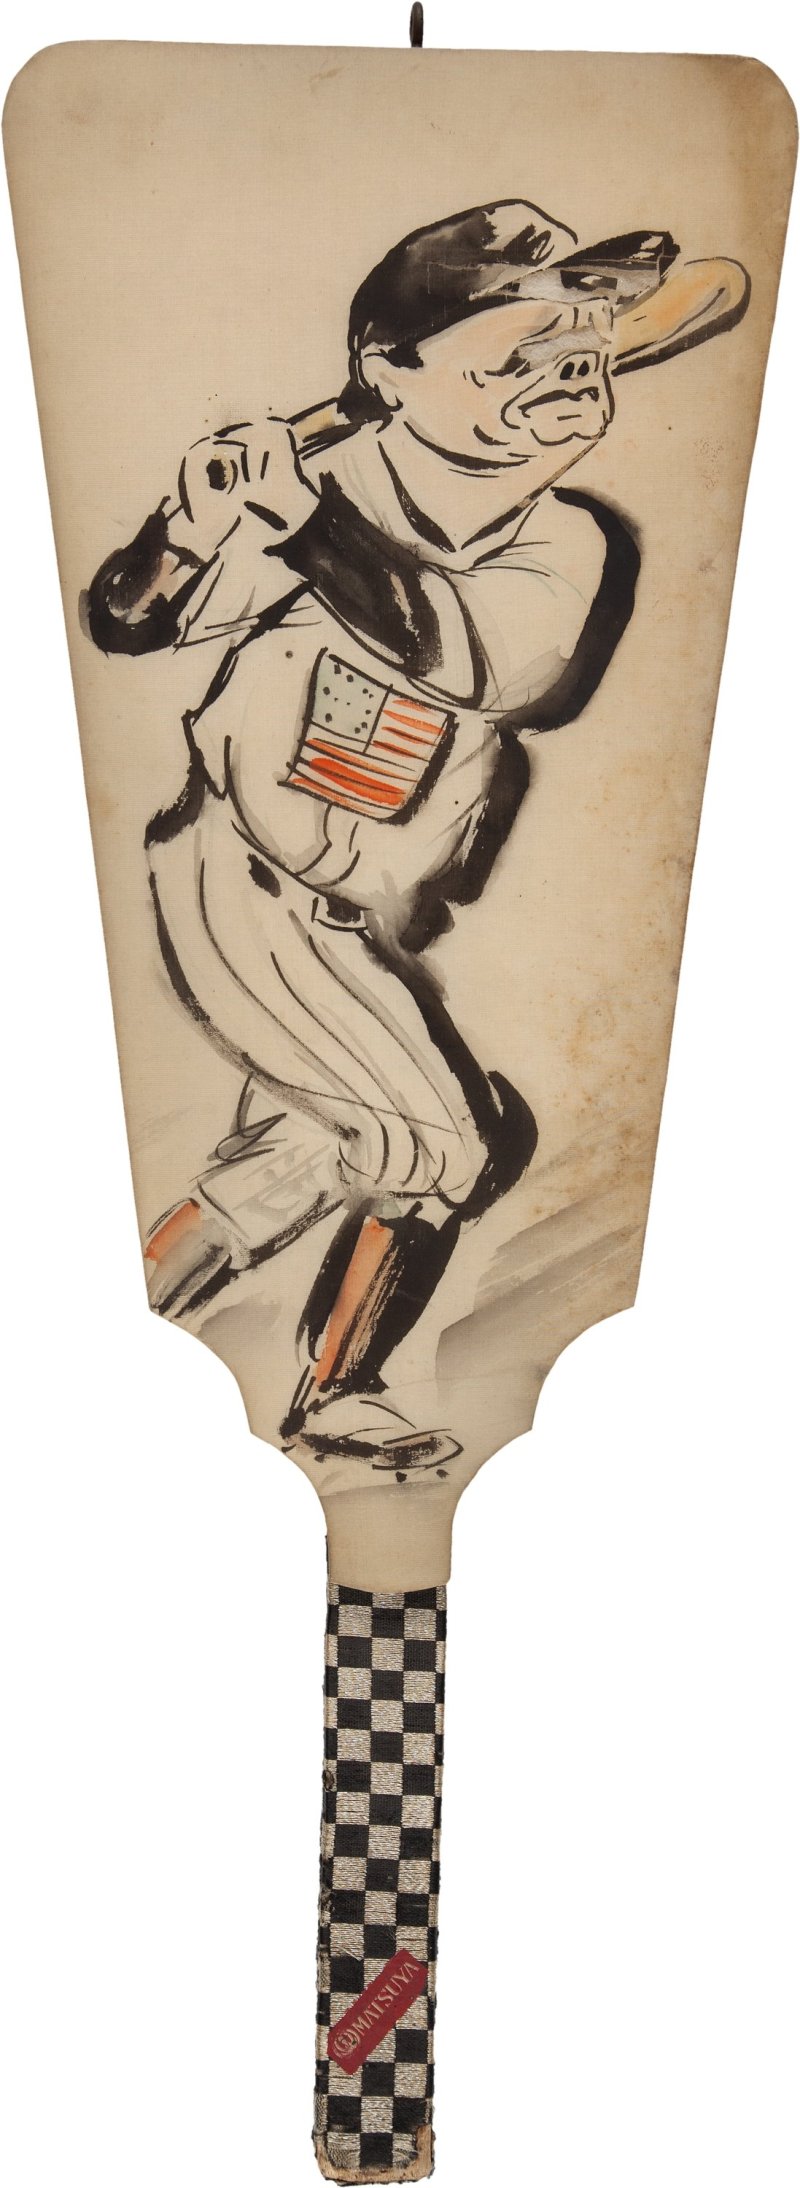 Heritage Baseball Auction